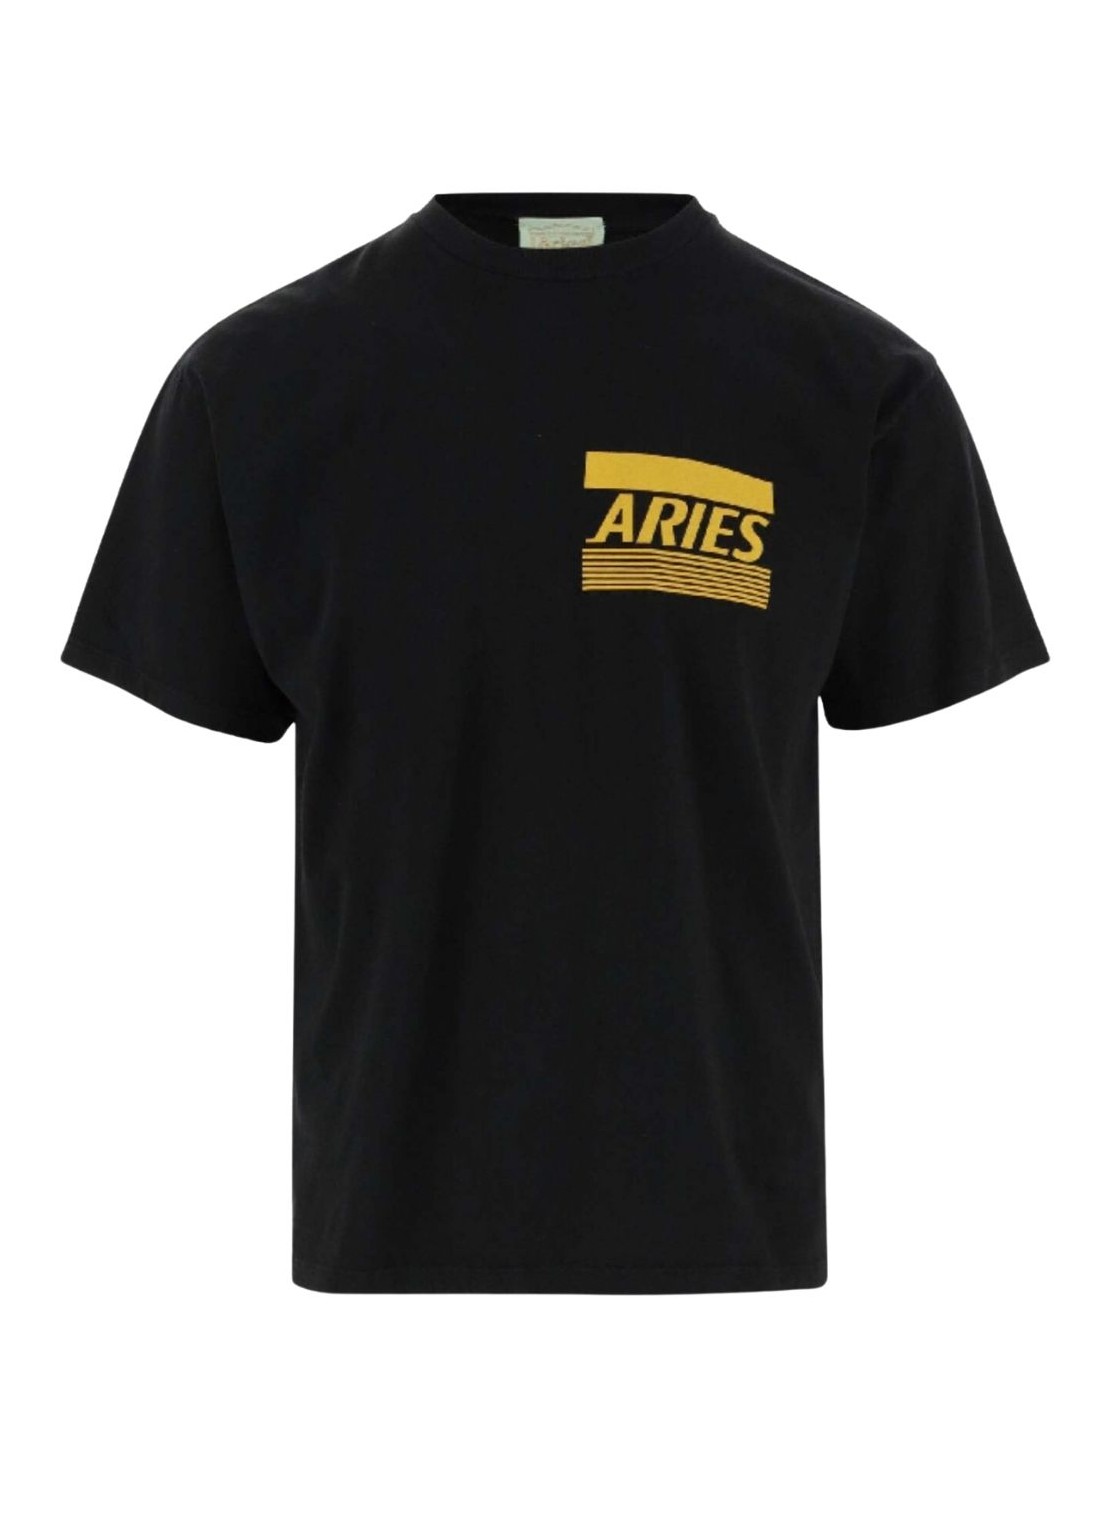 Camiseta aries t-shirt man credit card ss tee fuar60017 black talla negro
 